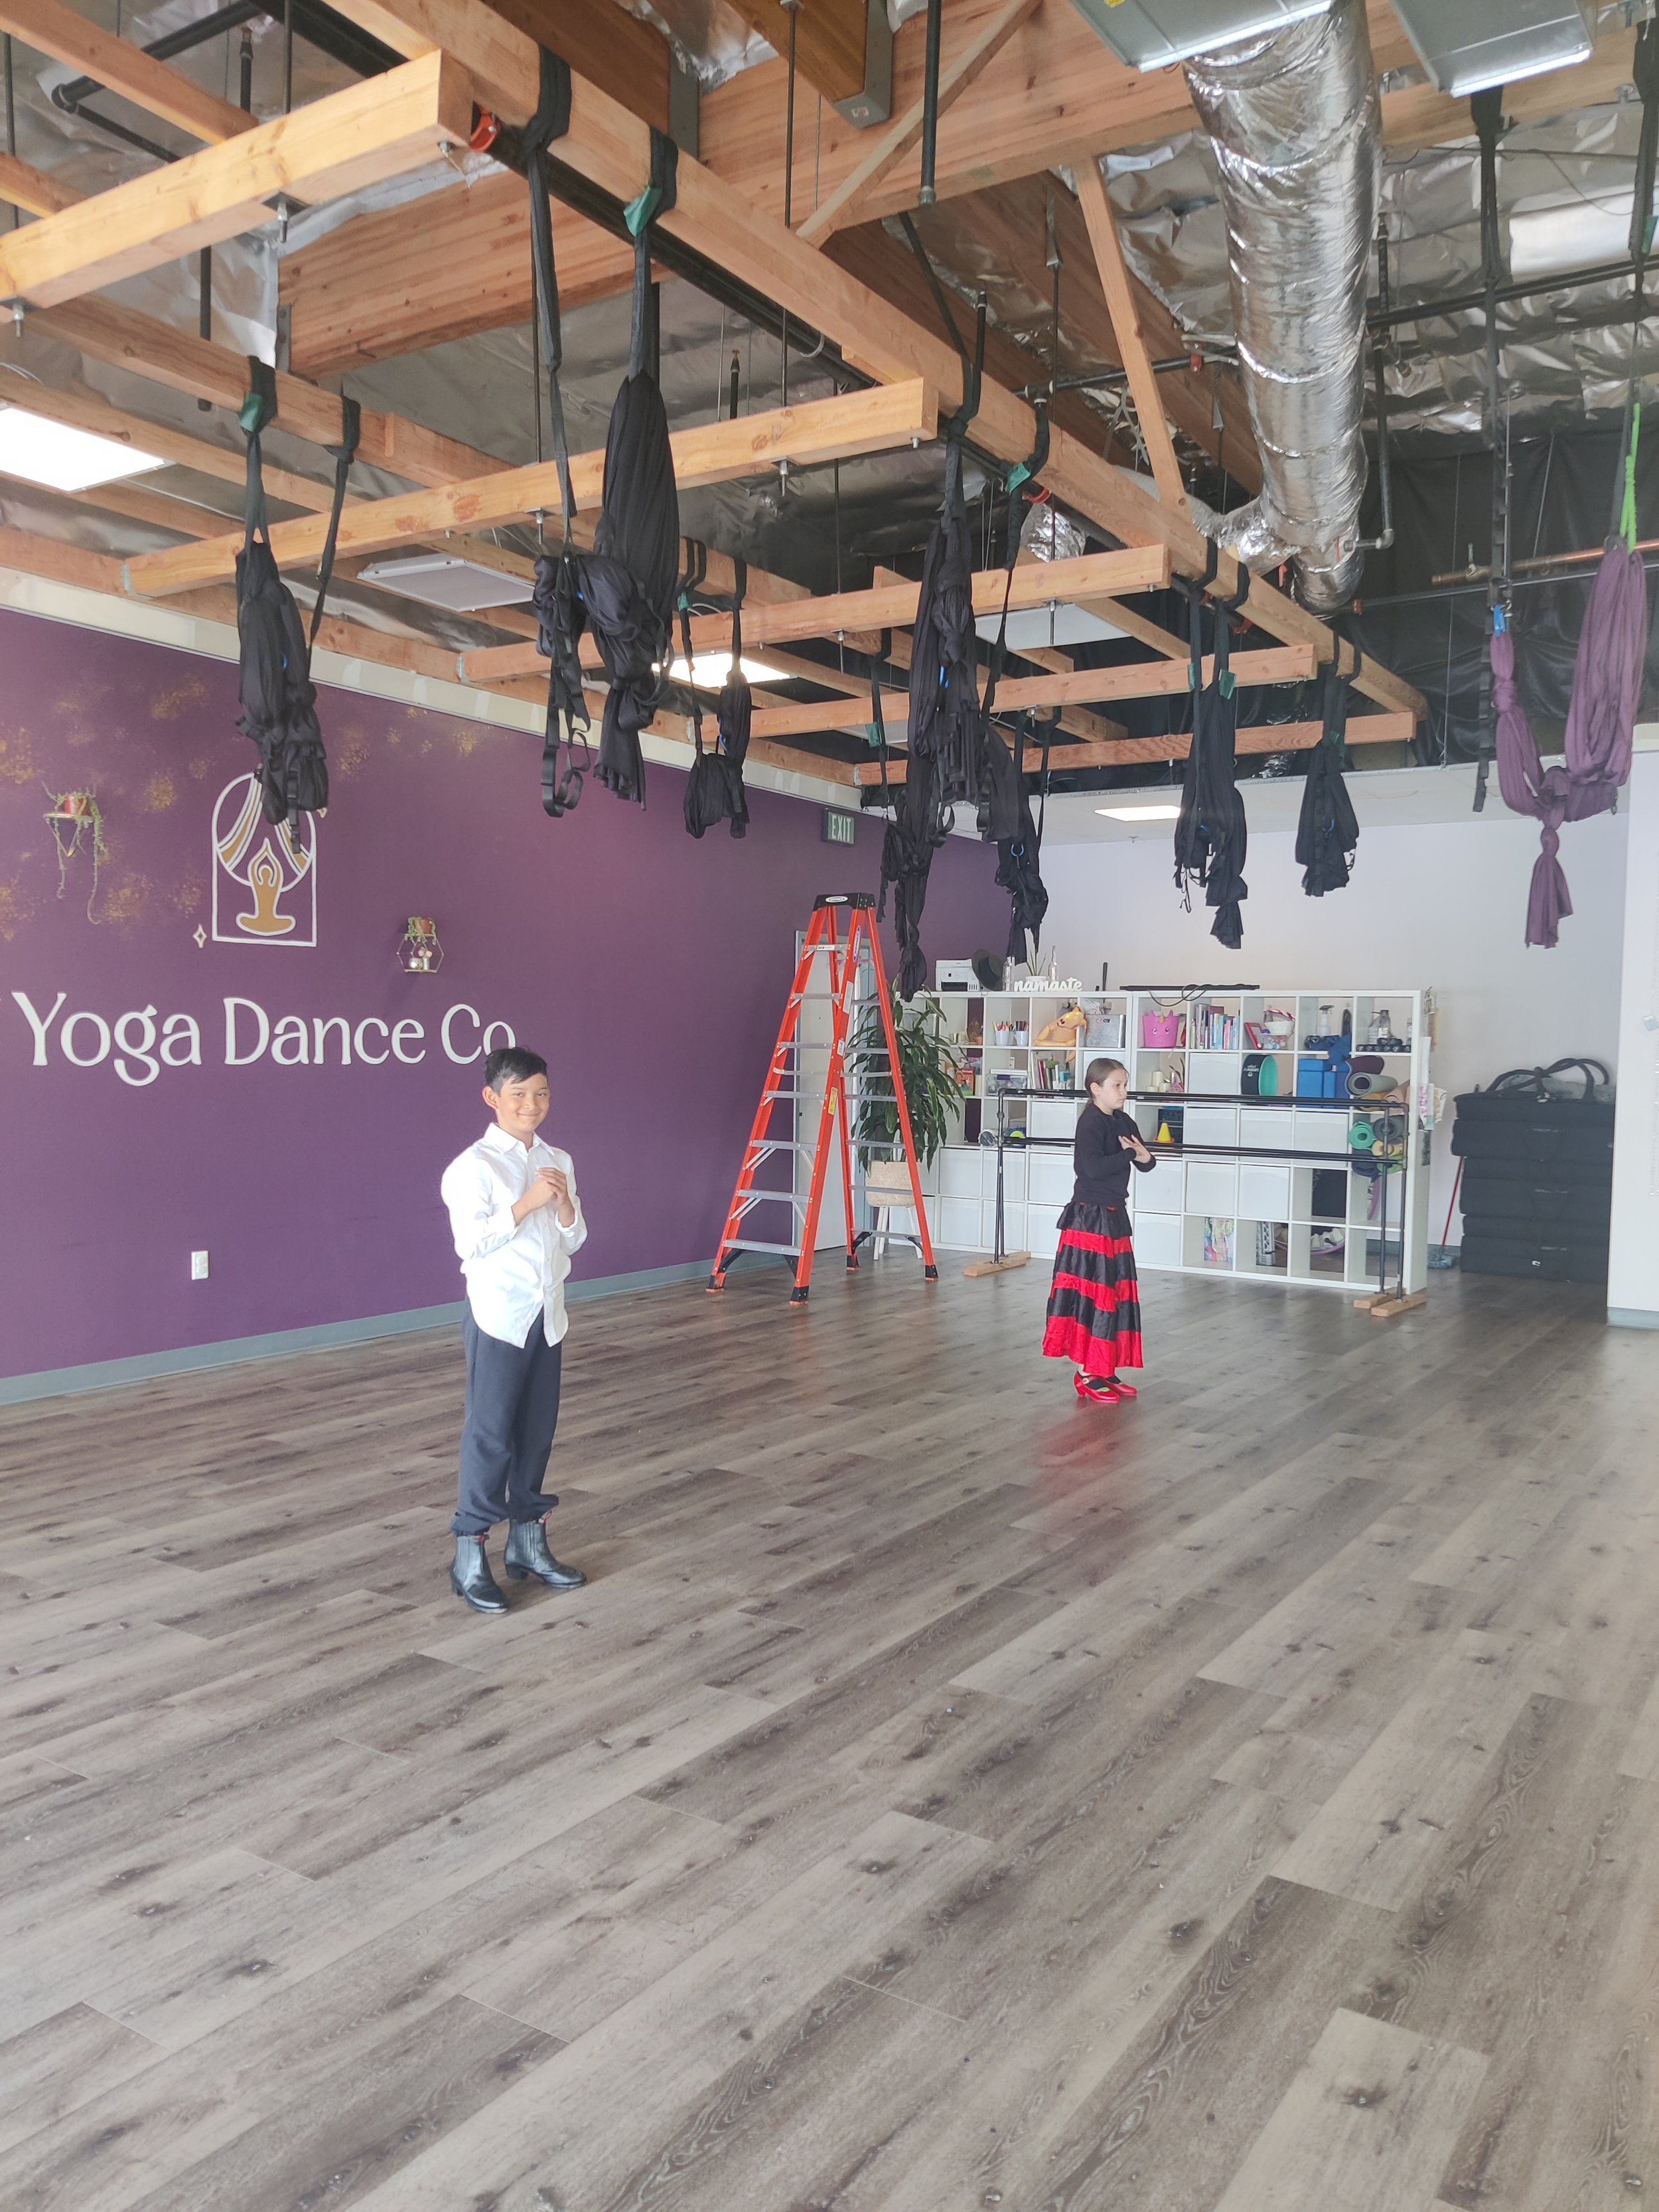 Yoga Dance Co